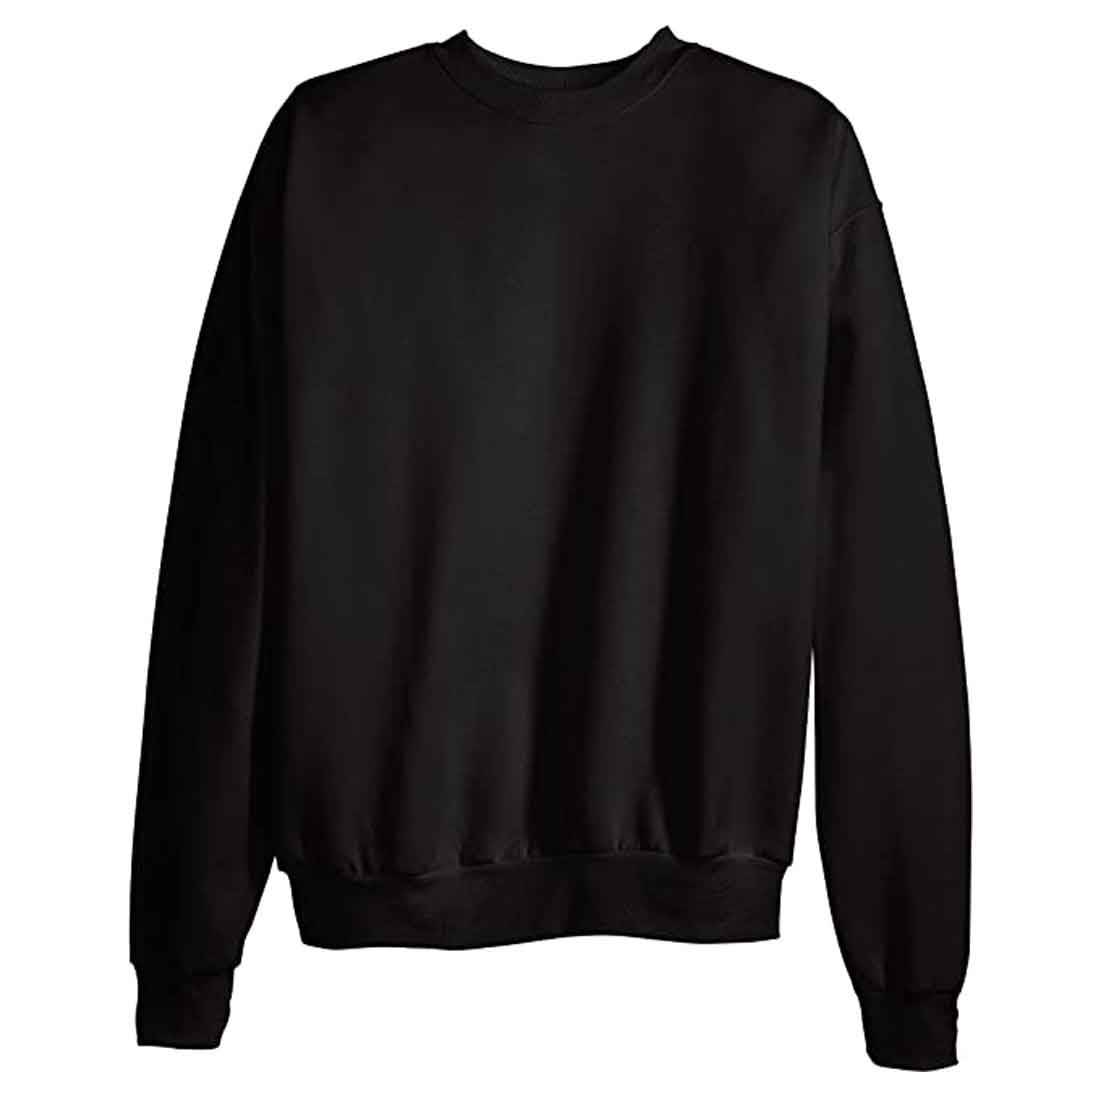 Black Oversized Sweatshirt Men With Full Sleeves Relaxed Fit - ABHI